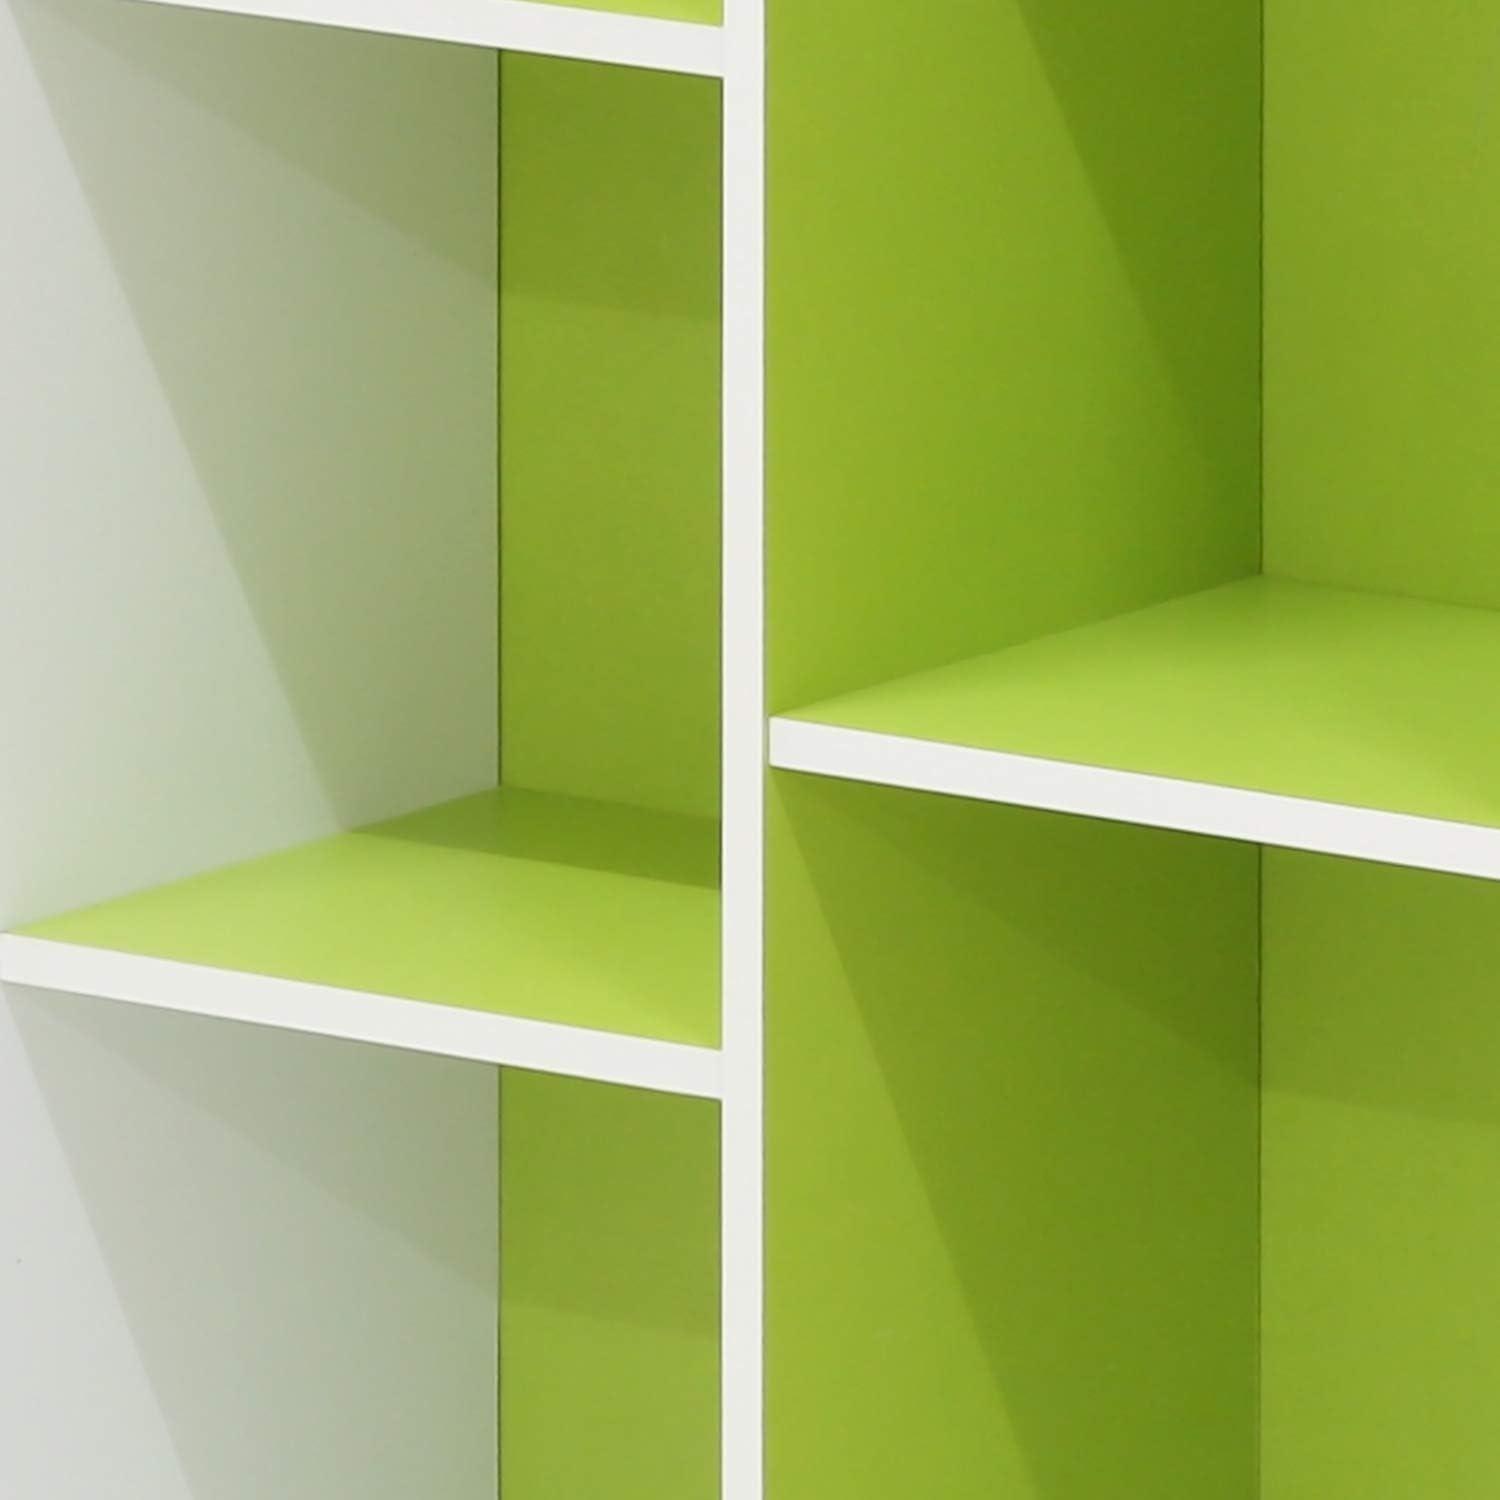 Contemporary White & Light Green Wood 11-Cube Kids Storage Shelf